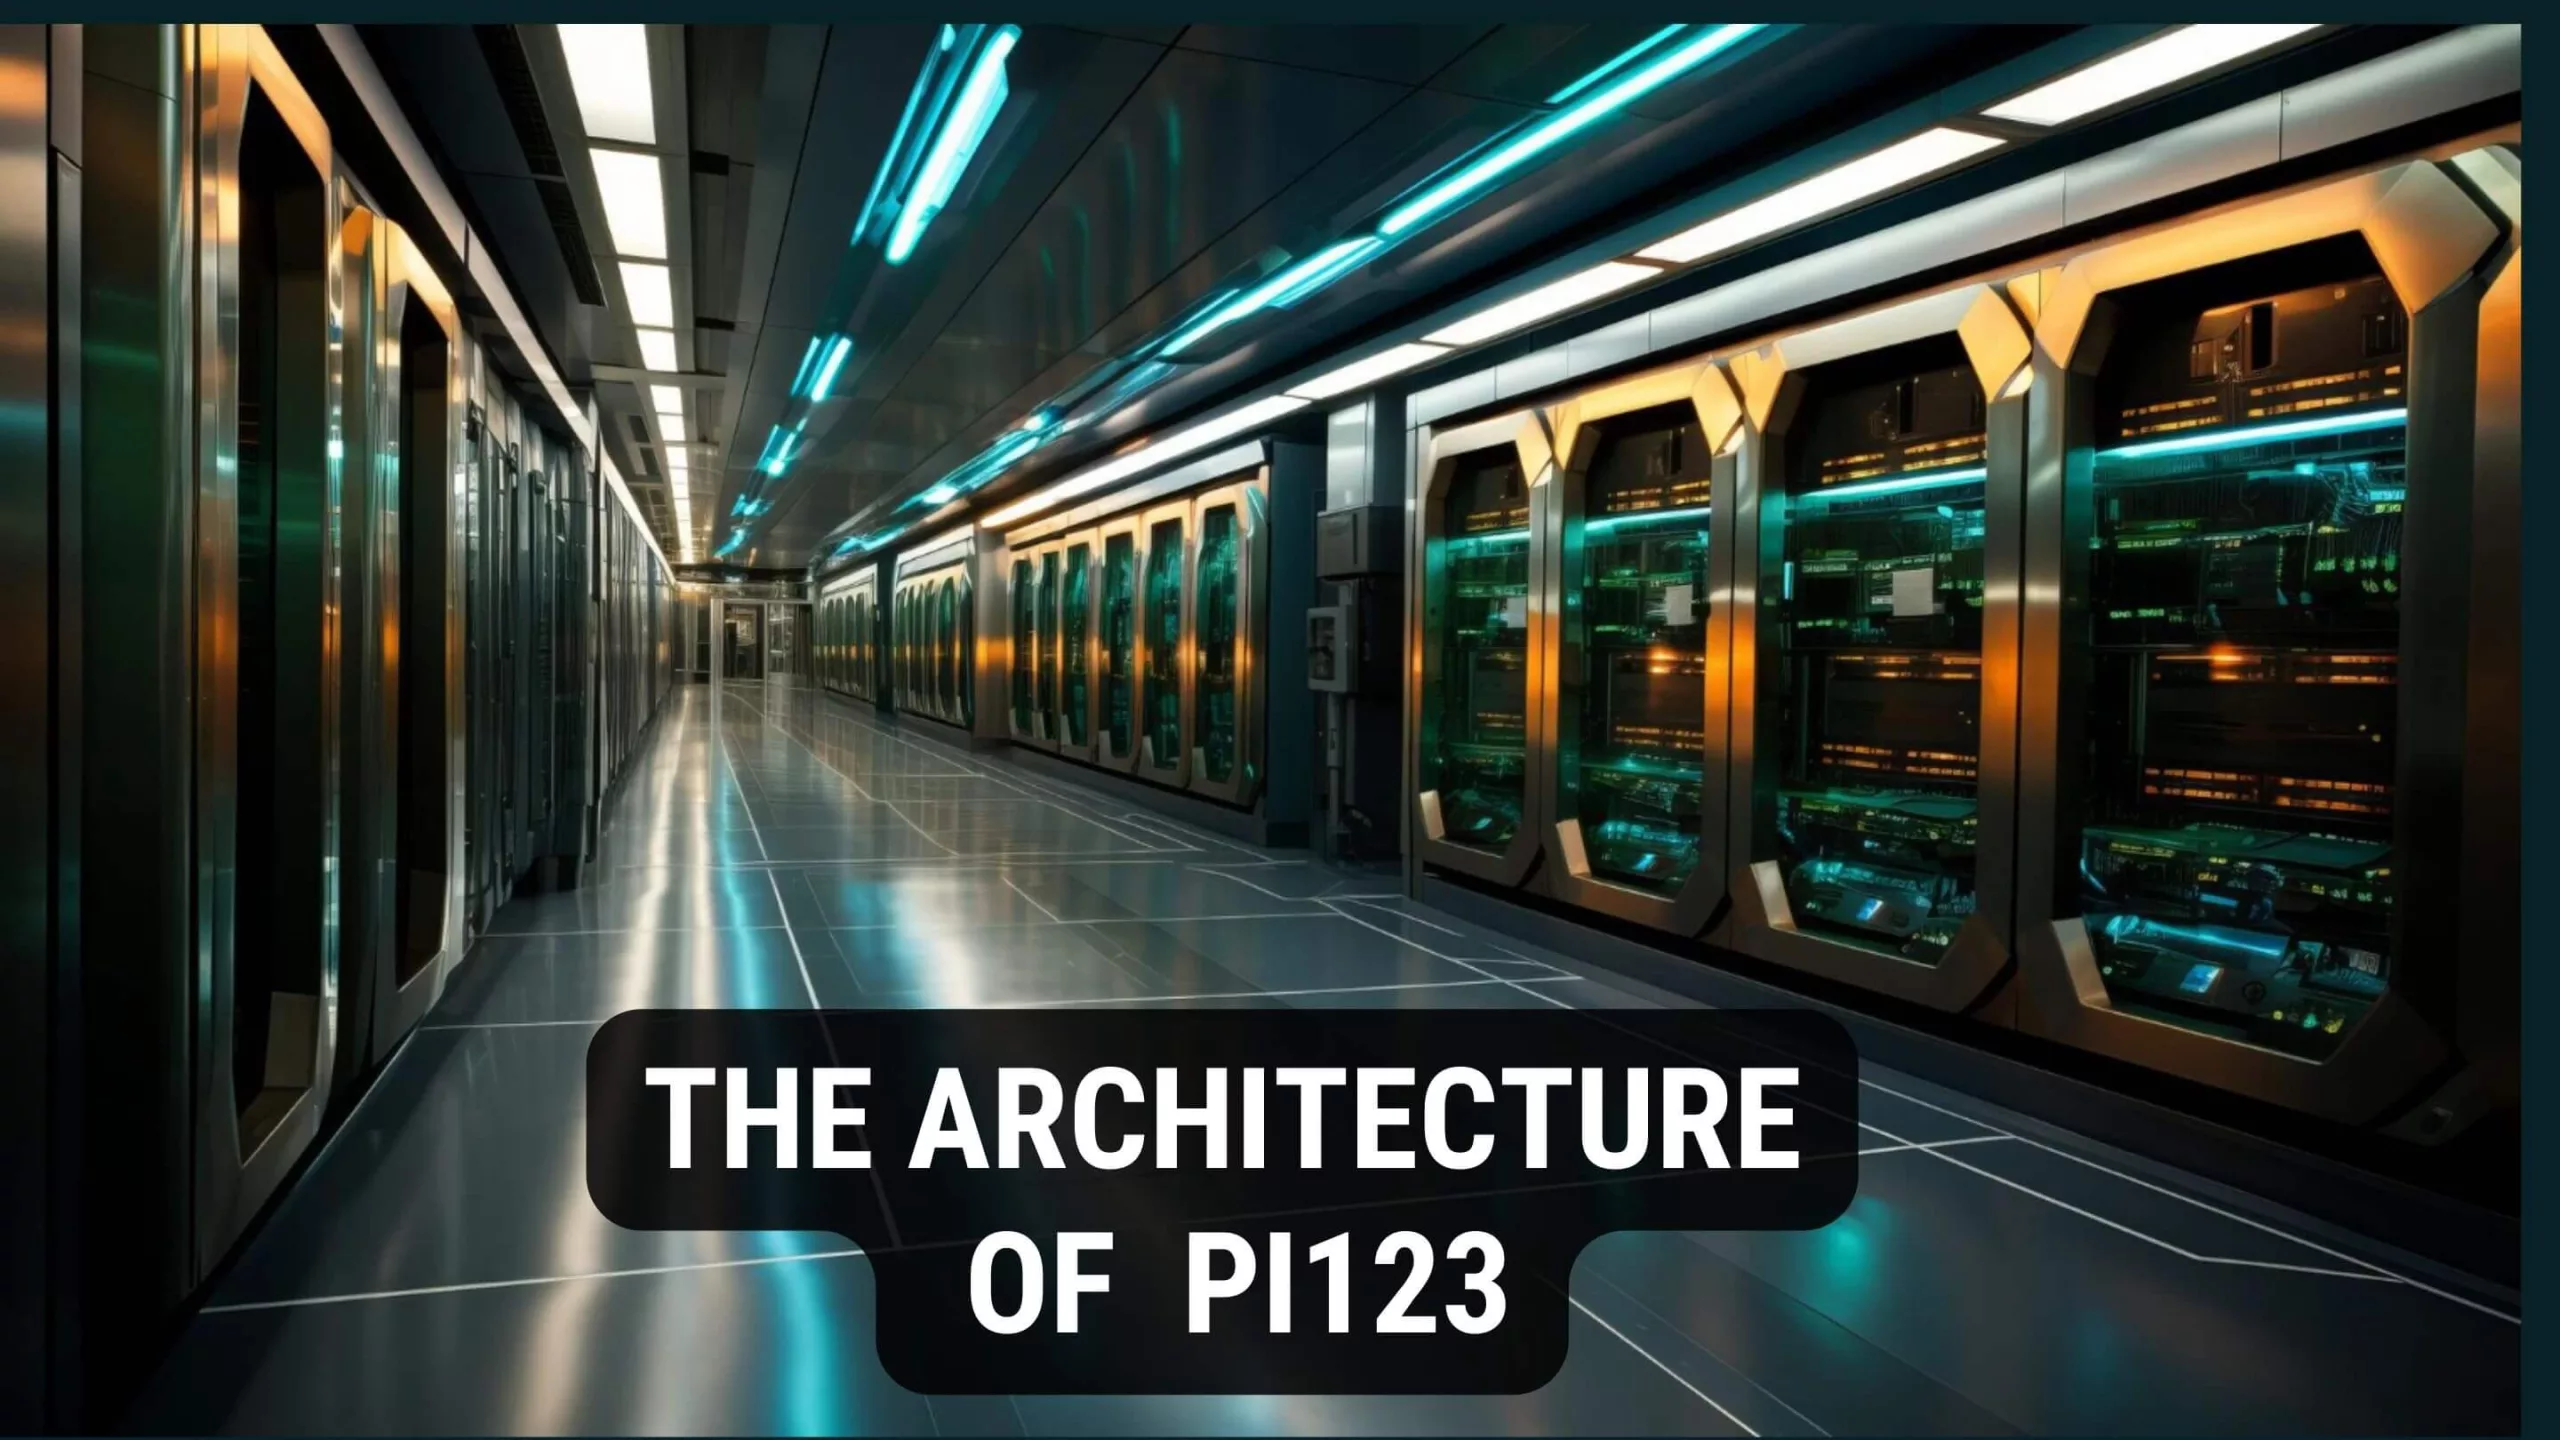 The Architecture of Pi123